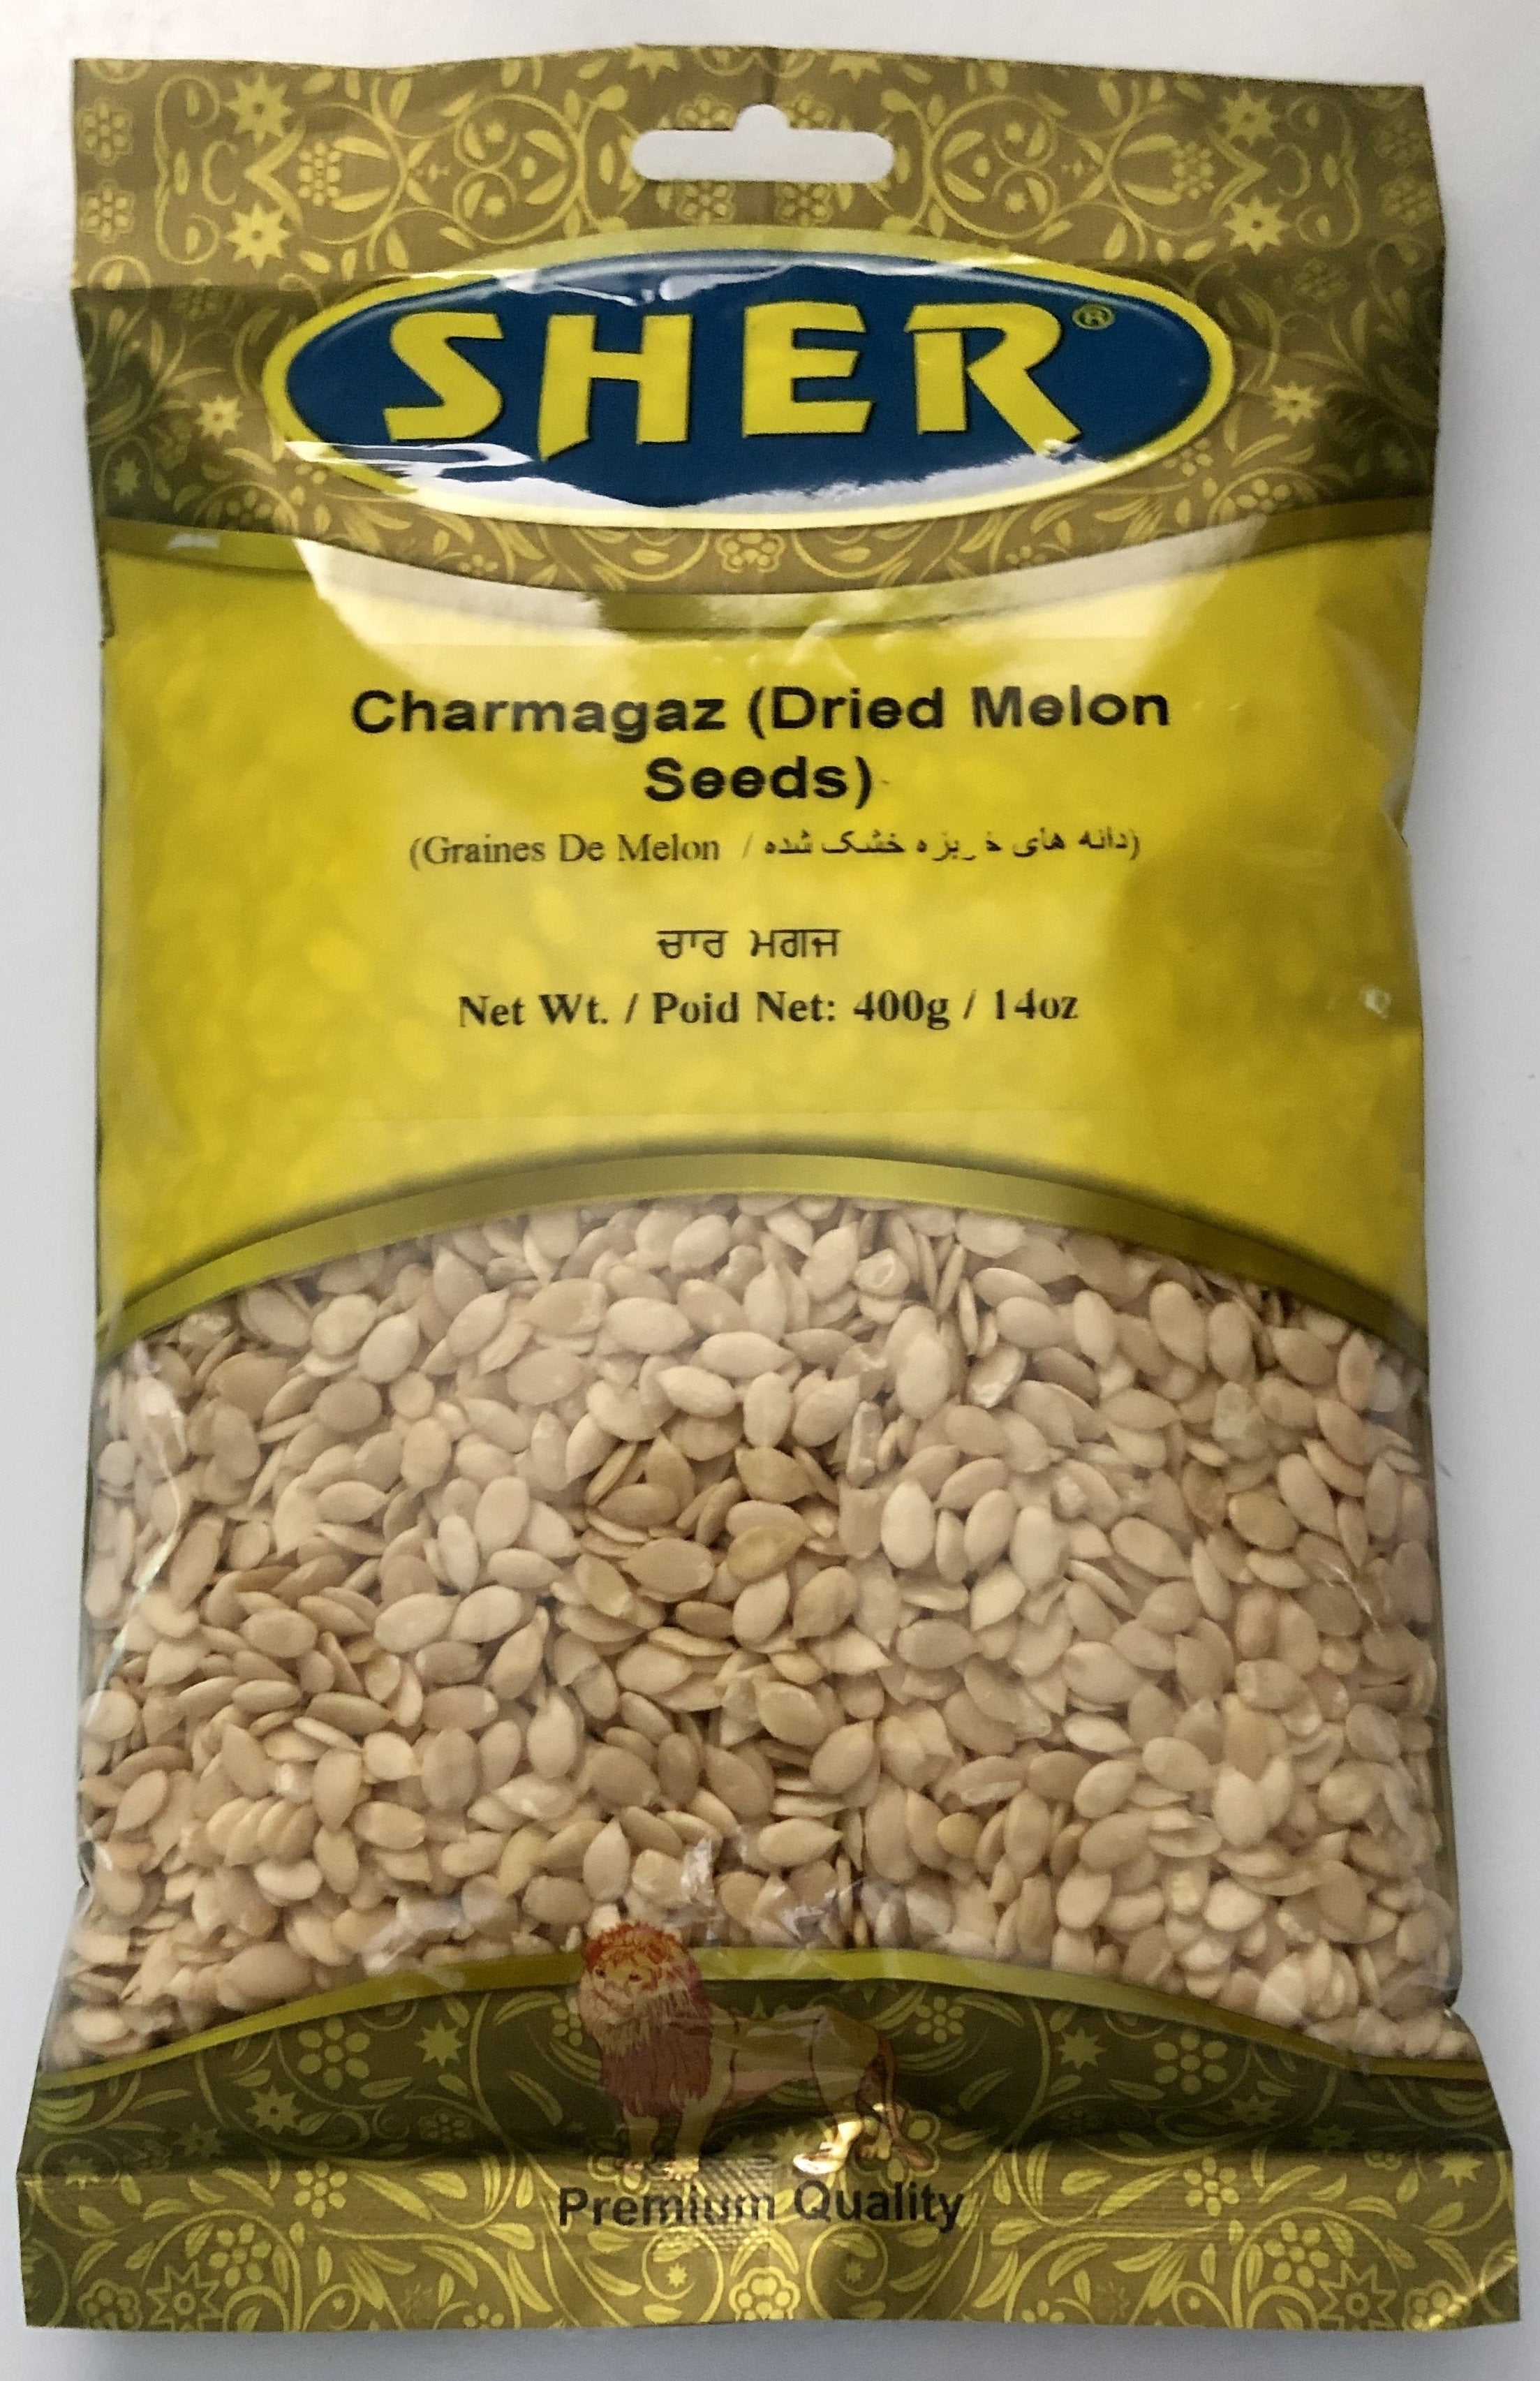 Melon Seeds - Charmagaz - 400g - Sher